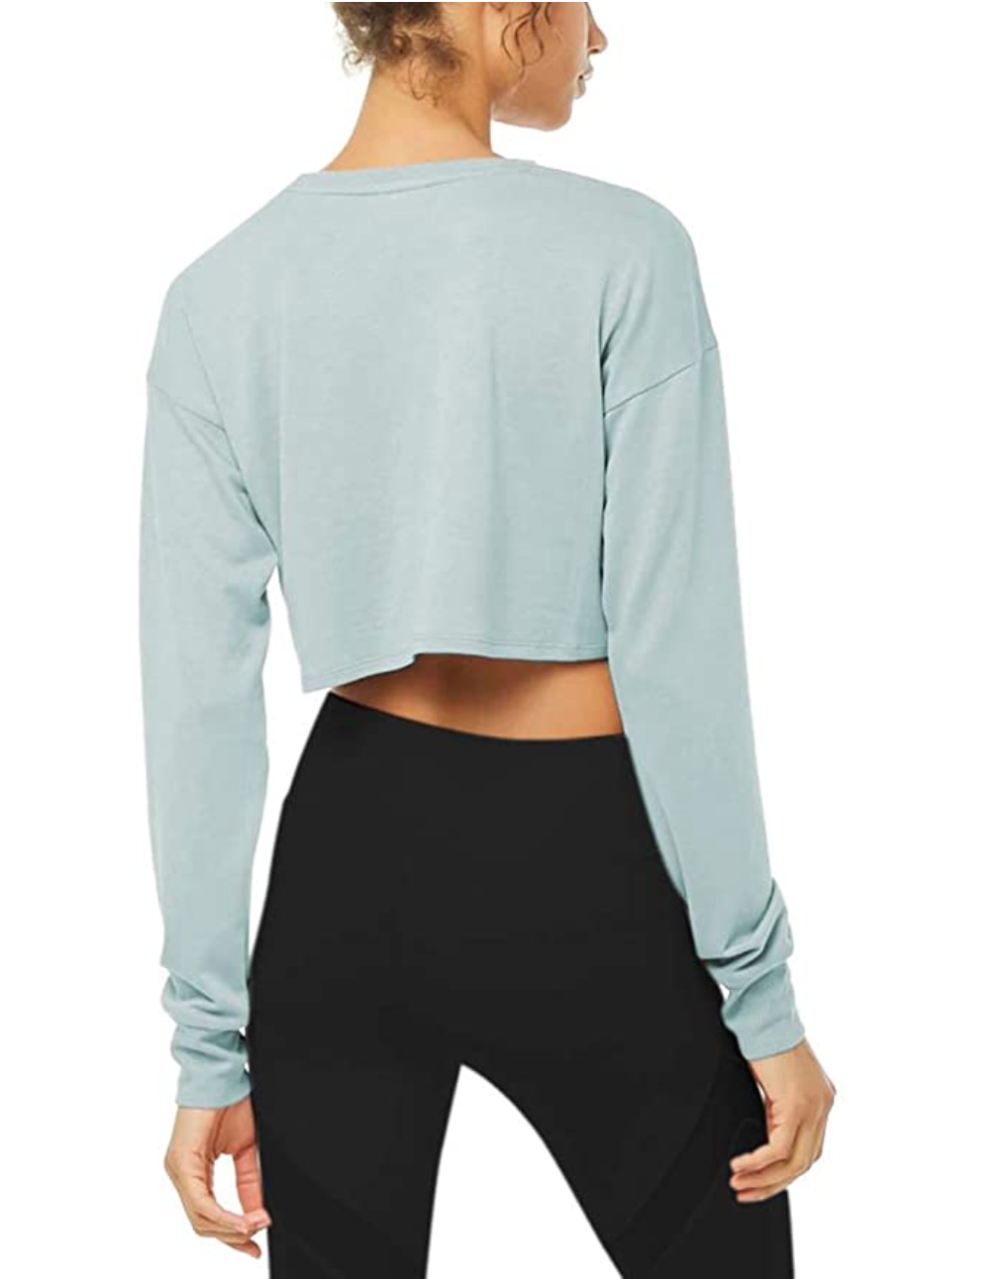 Bestisun Long Sleeve Crop Top Cropped Sweatshirt for Women